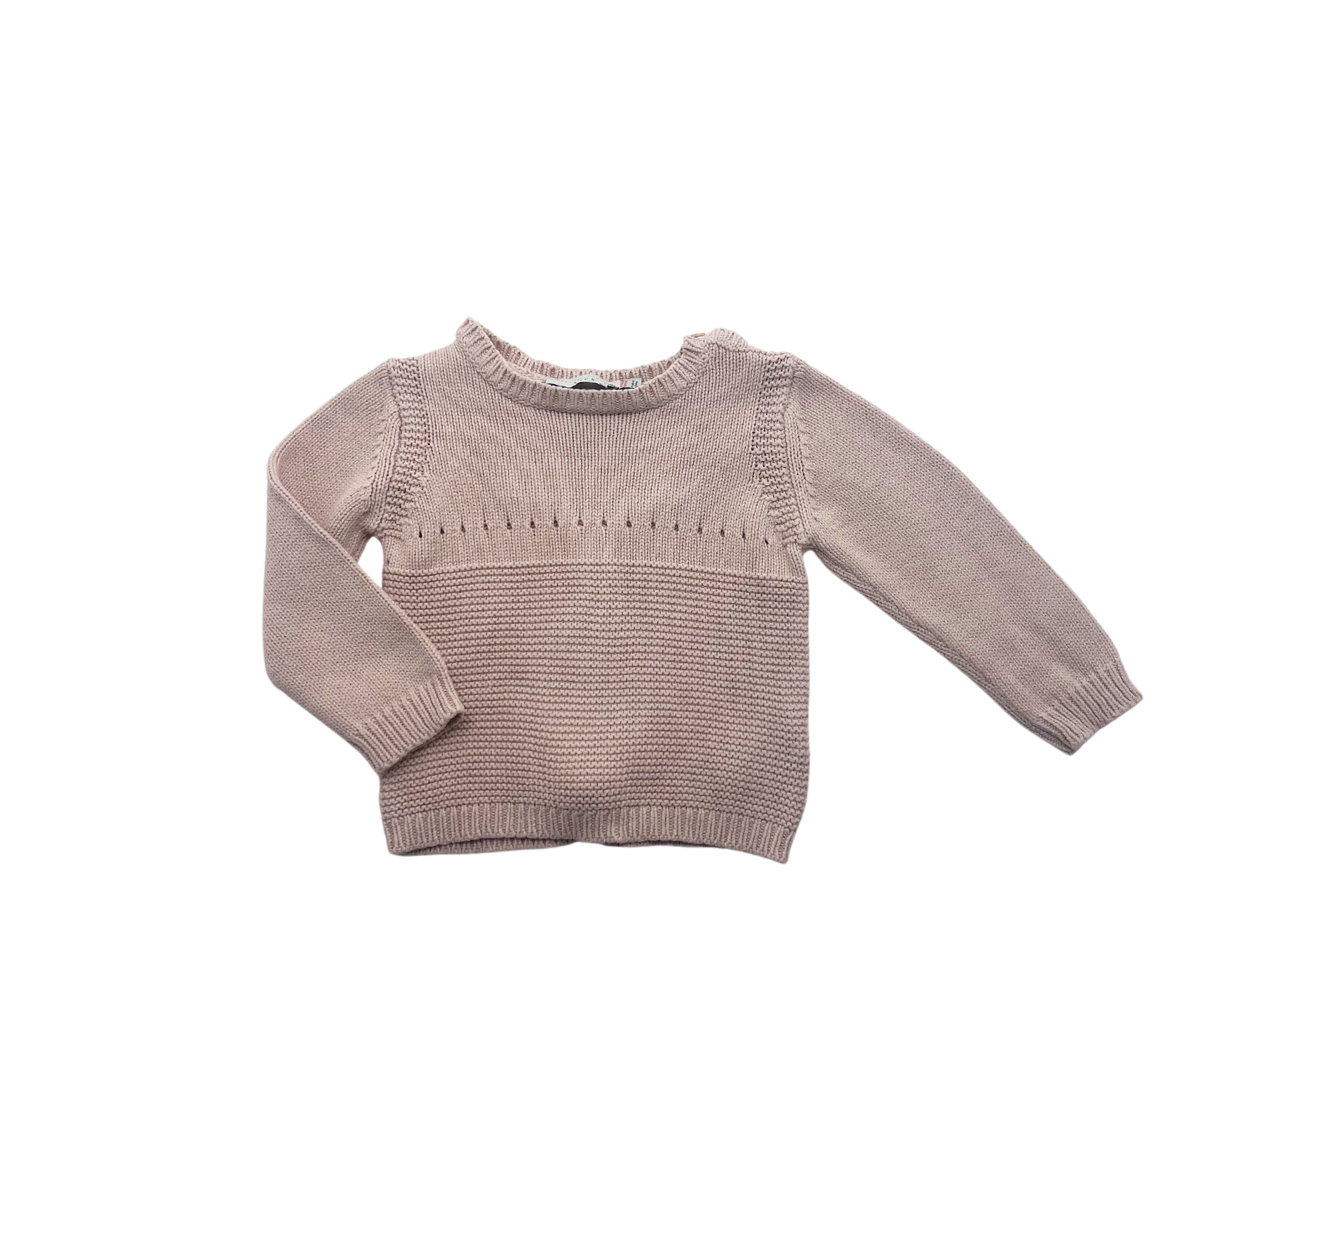 STELLA MCCARTNEY - Rabbit sweater - 18 months